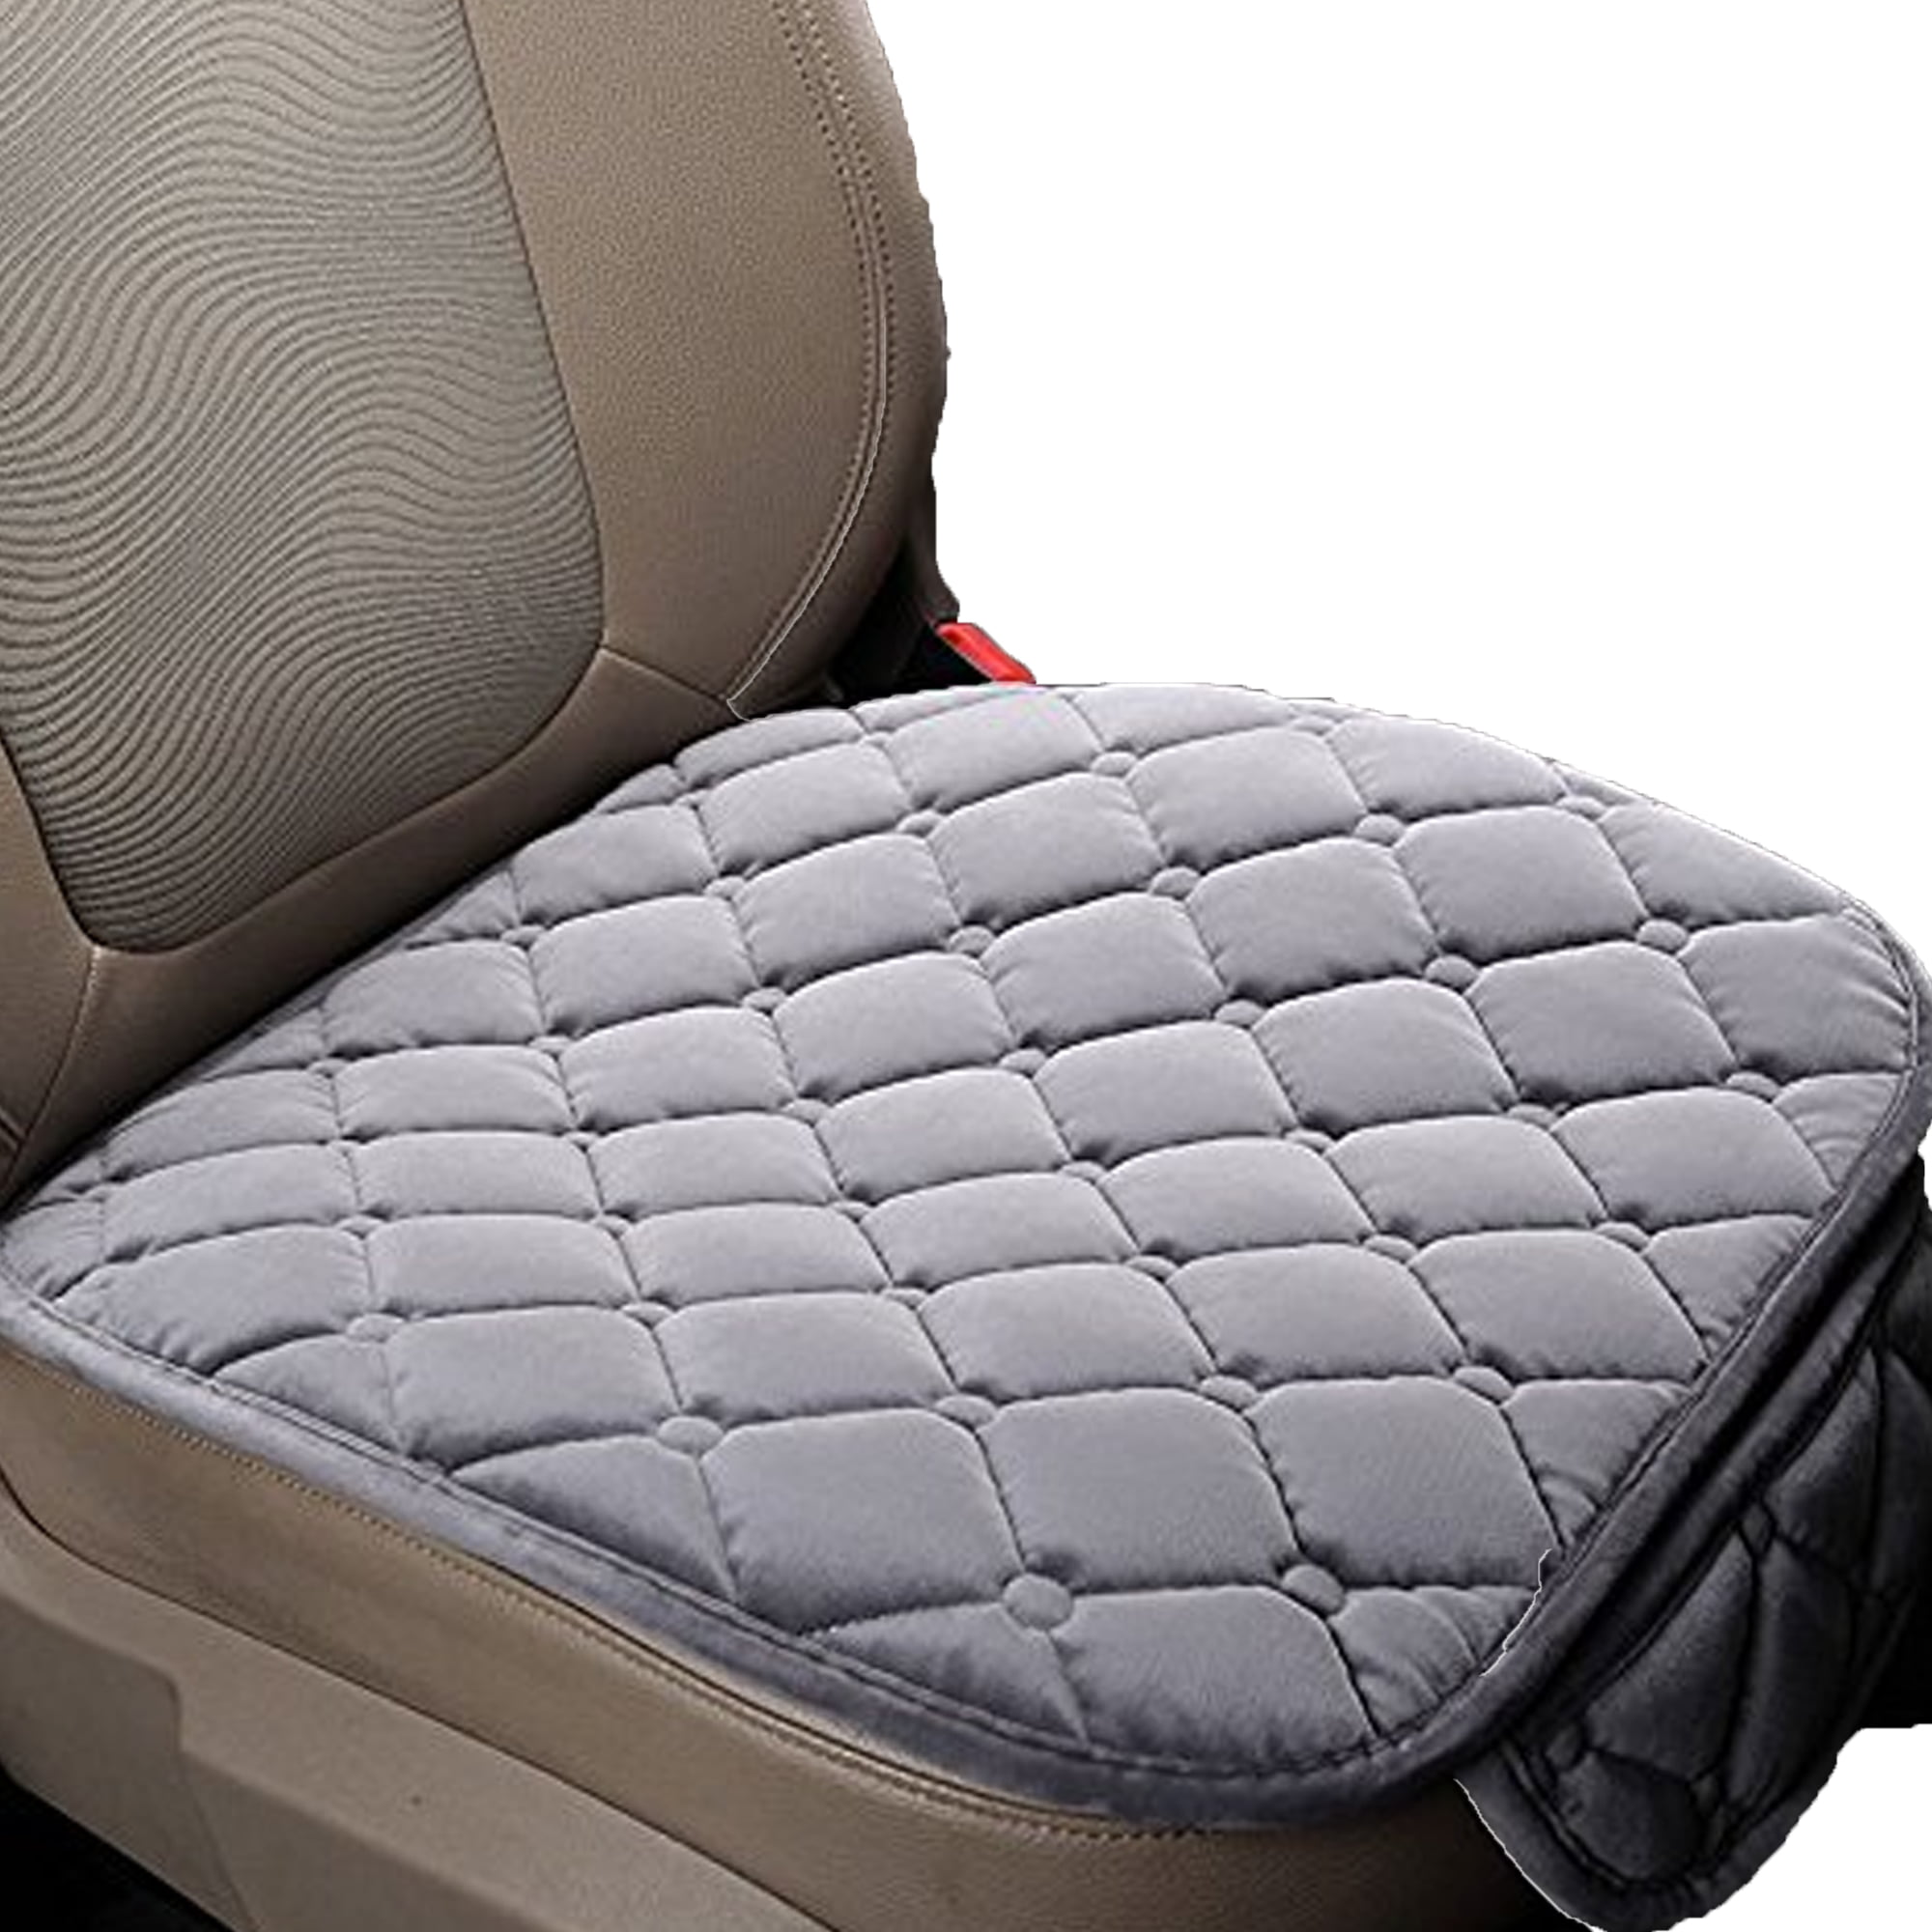 Car seat comfort aids